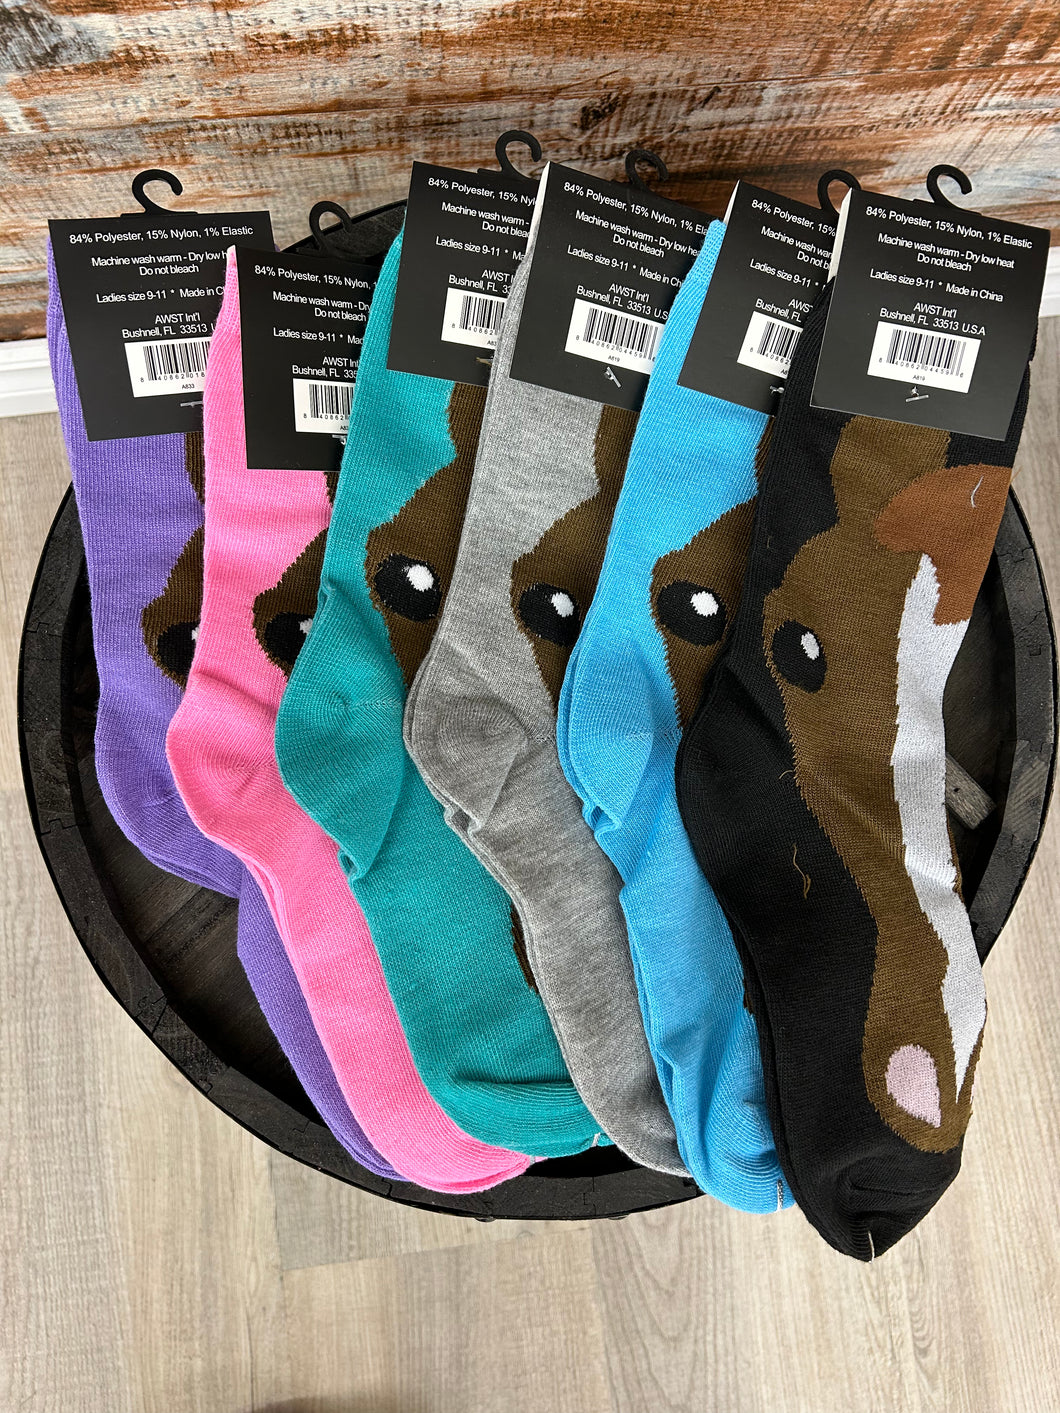 Horse Head Socks